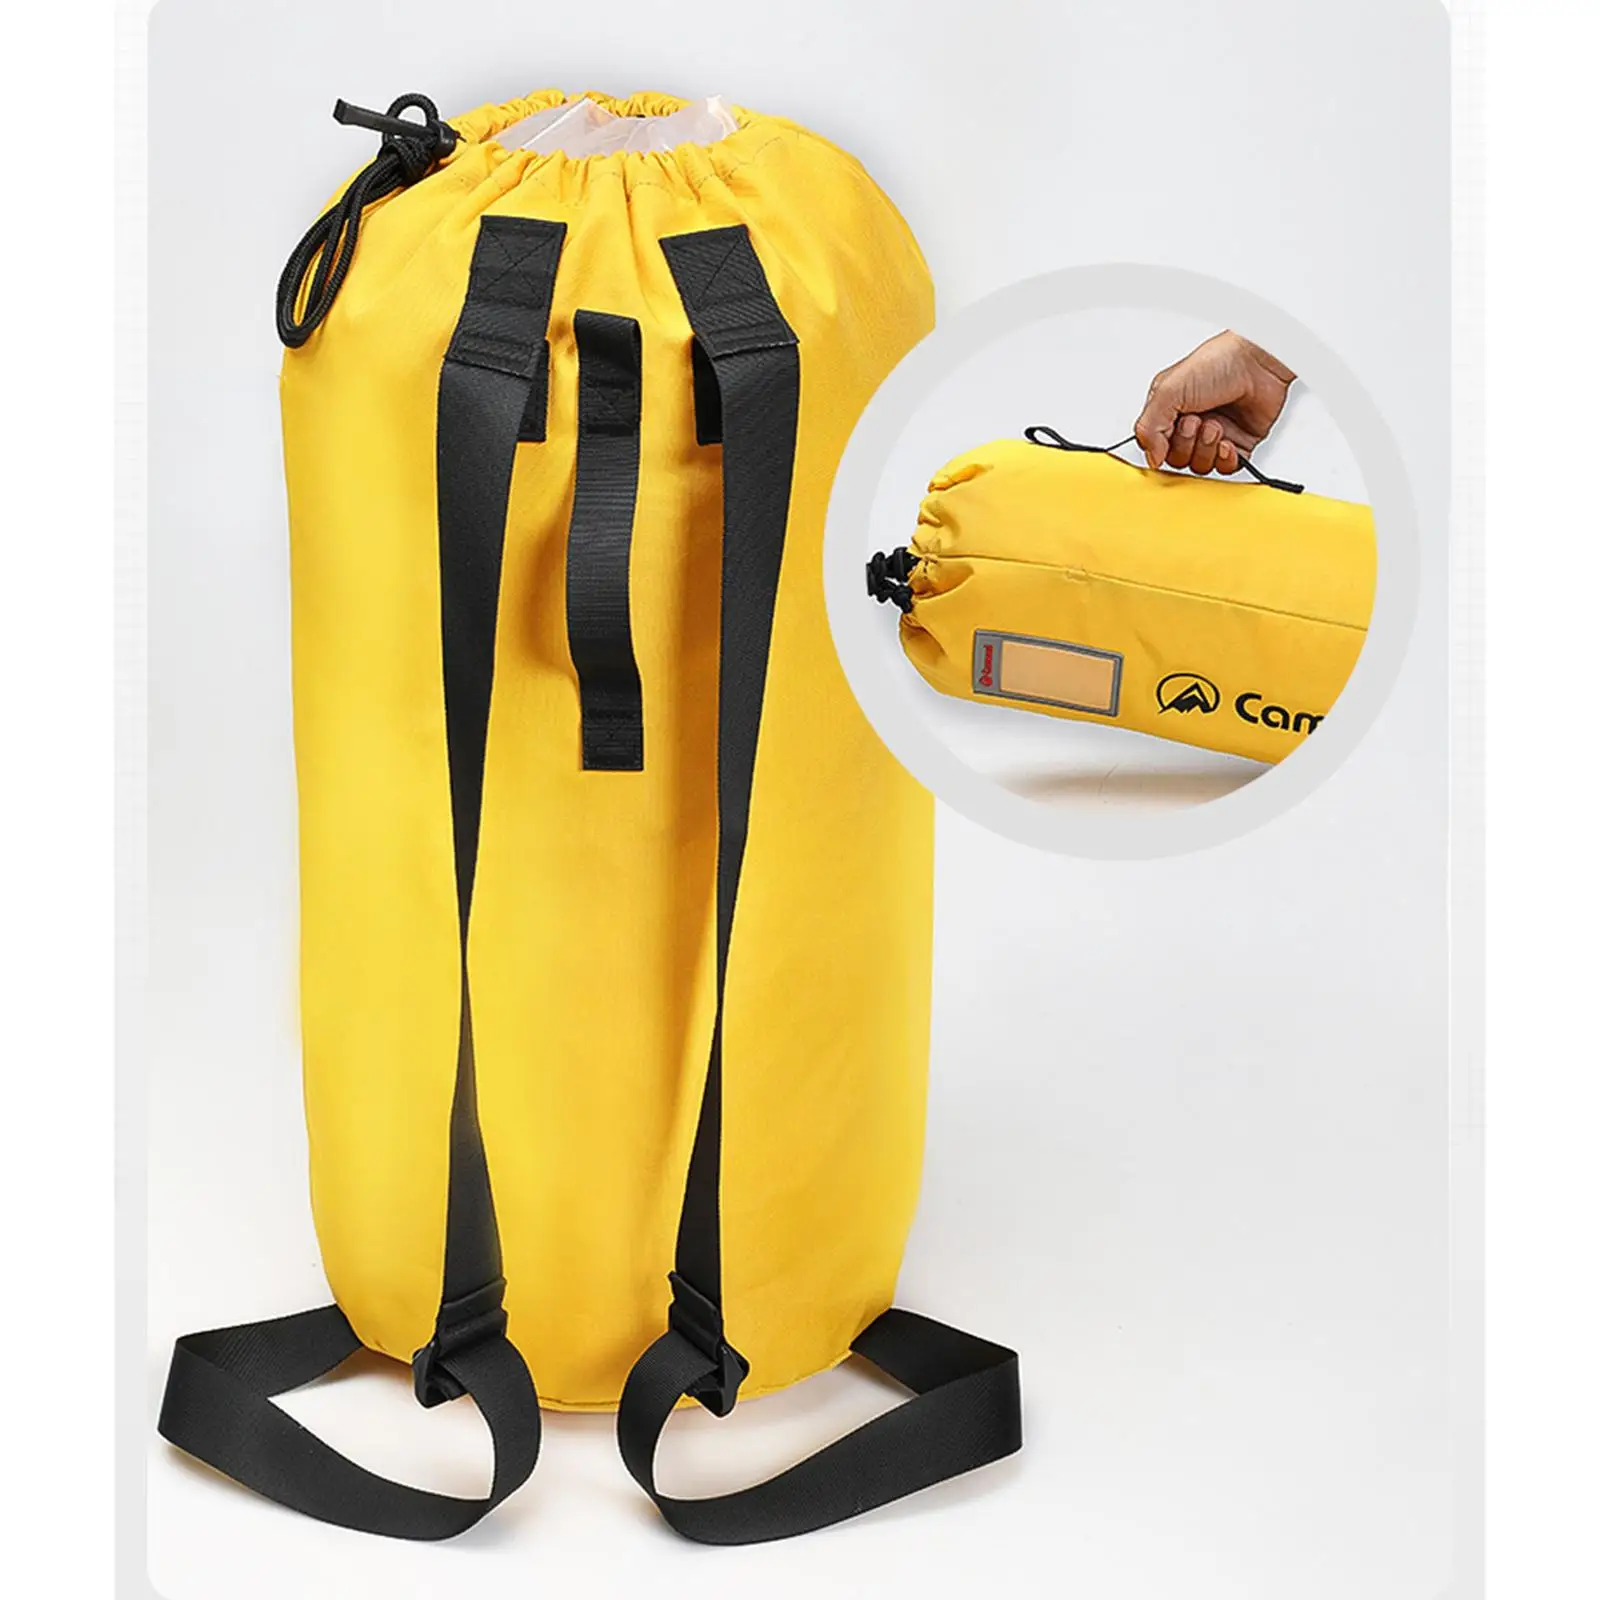 Rock Rope Storage Bag - Rock and Tree Climbing Equipment, Arborist Gear, Bucket Style Backpack, Waterproof Material